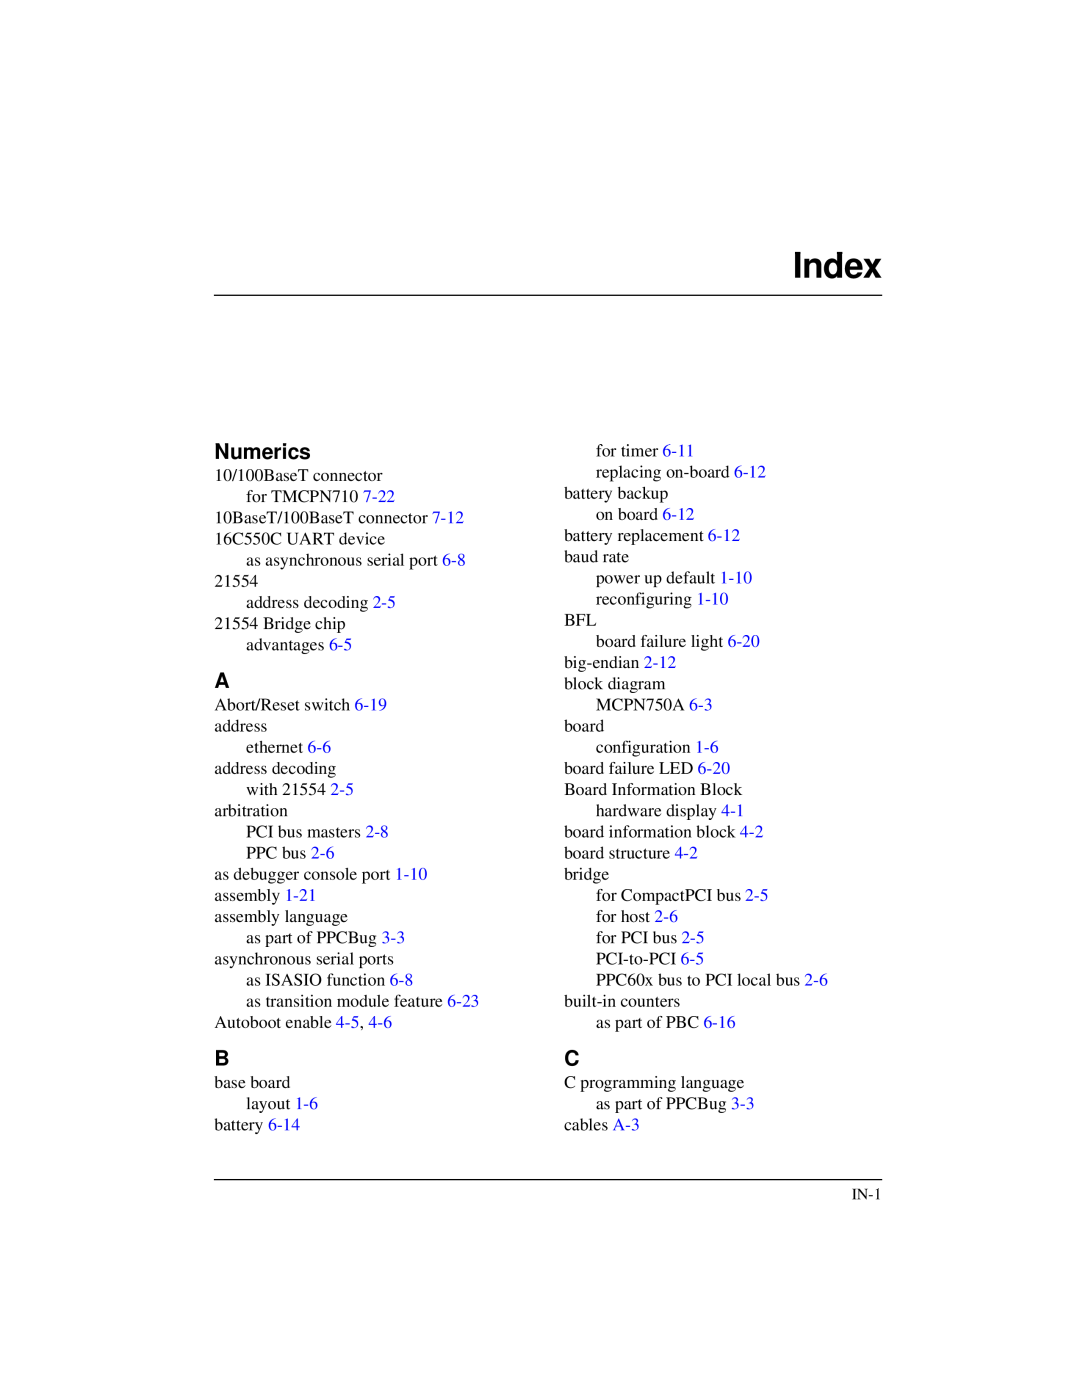 Motorola IH5, MCPN750A manual Index, Numerics 